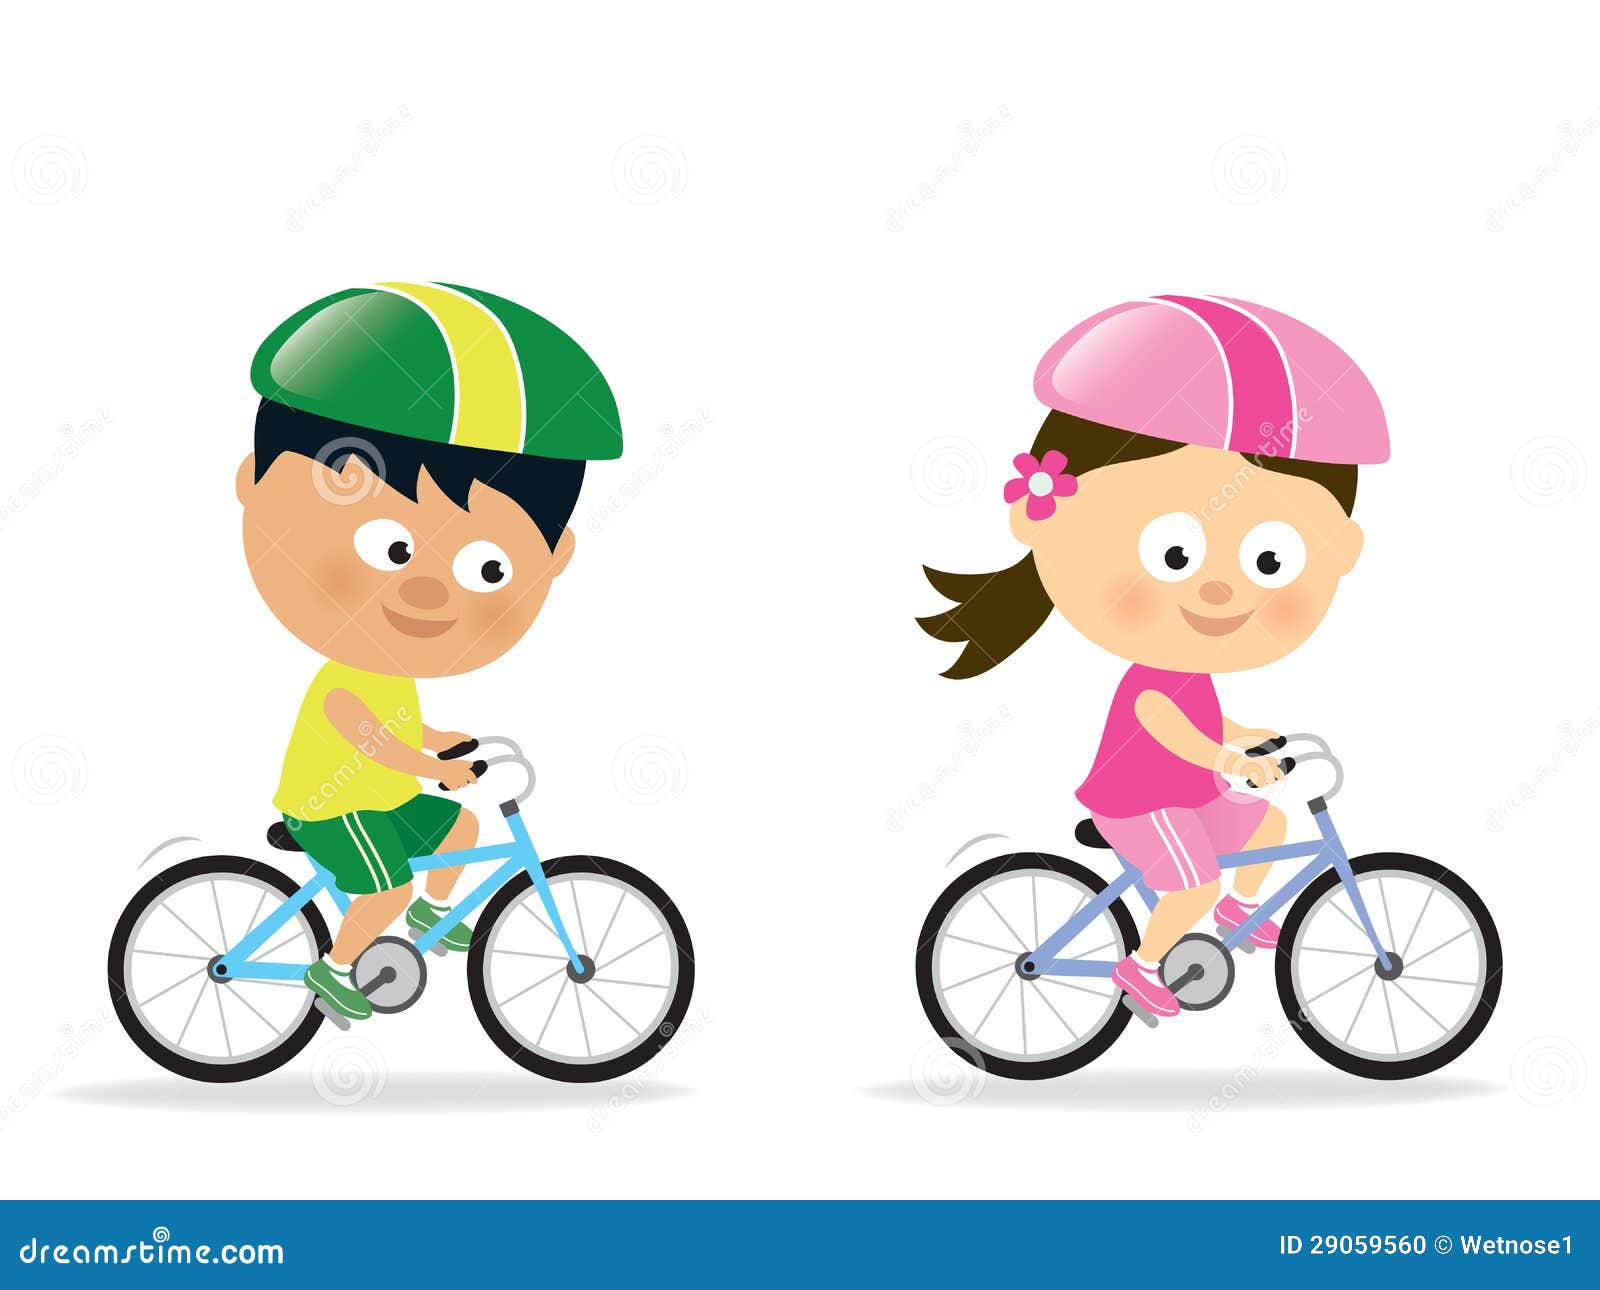 Child Riding A Bike Clipart